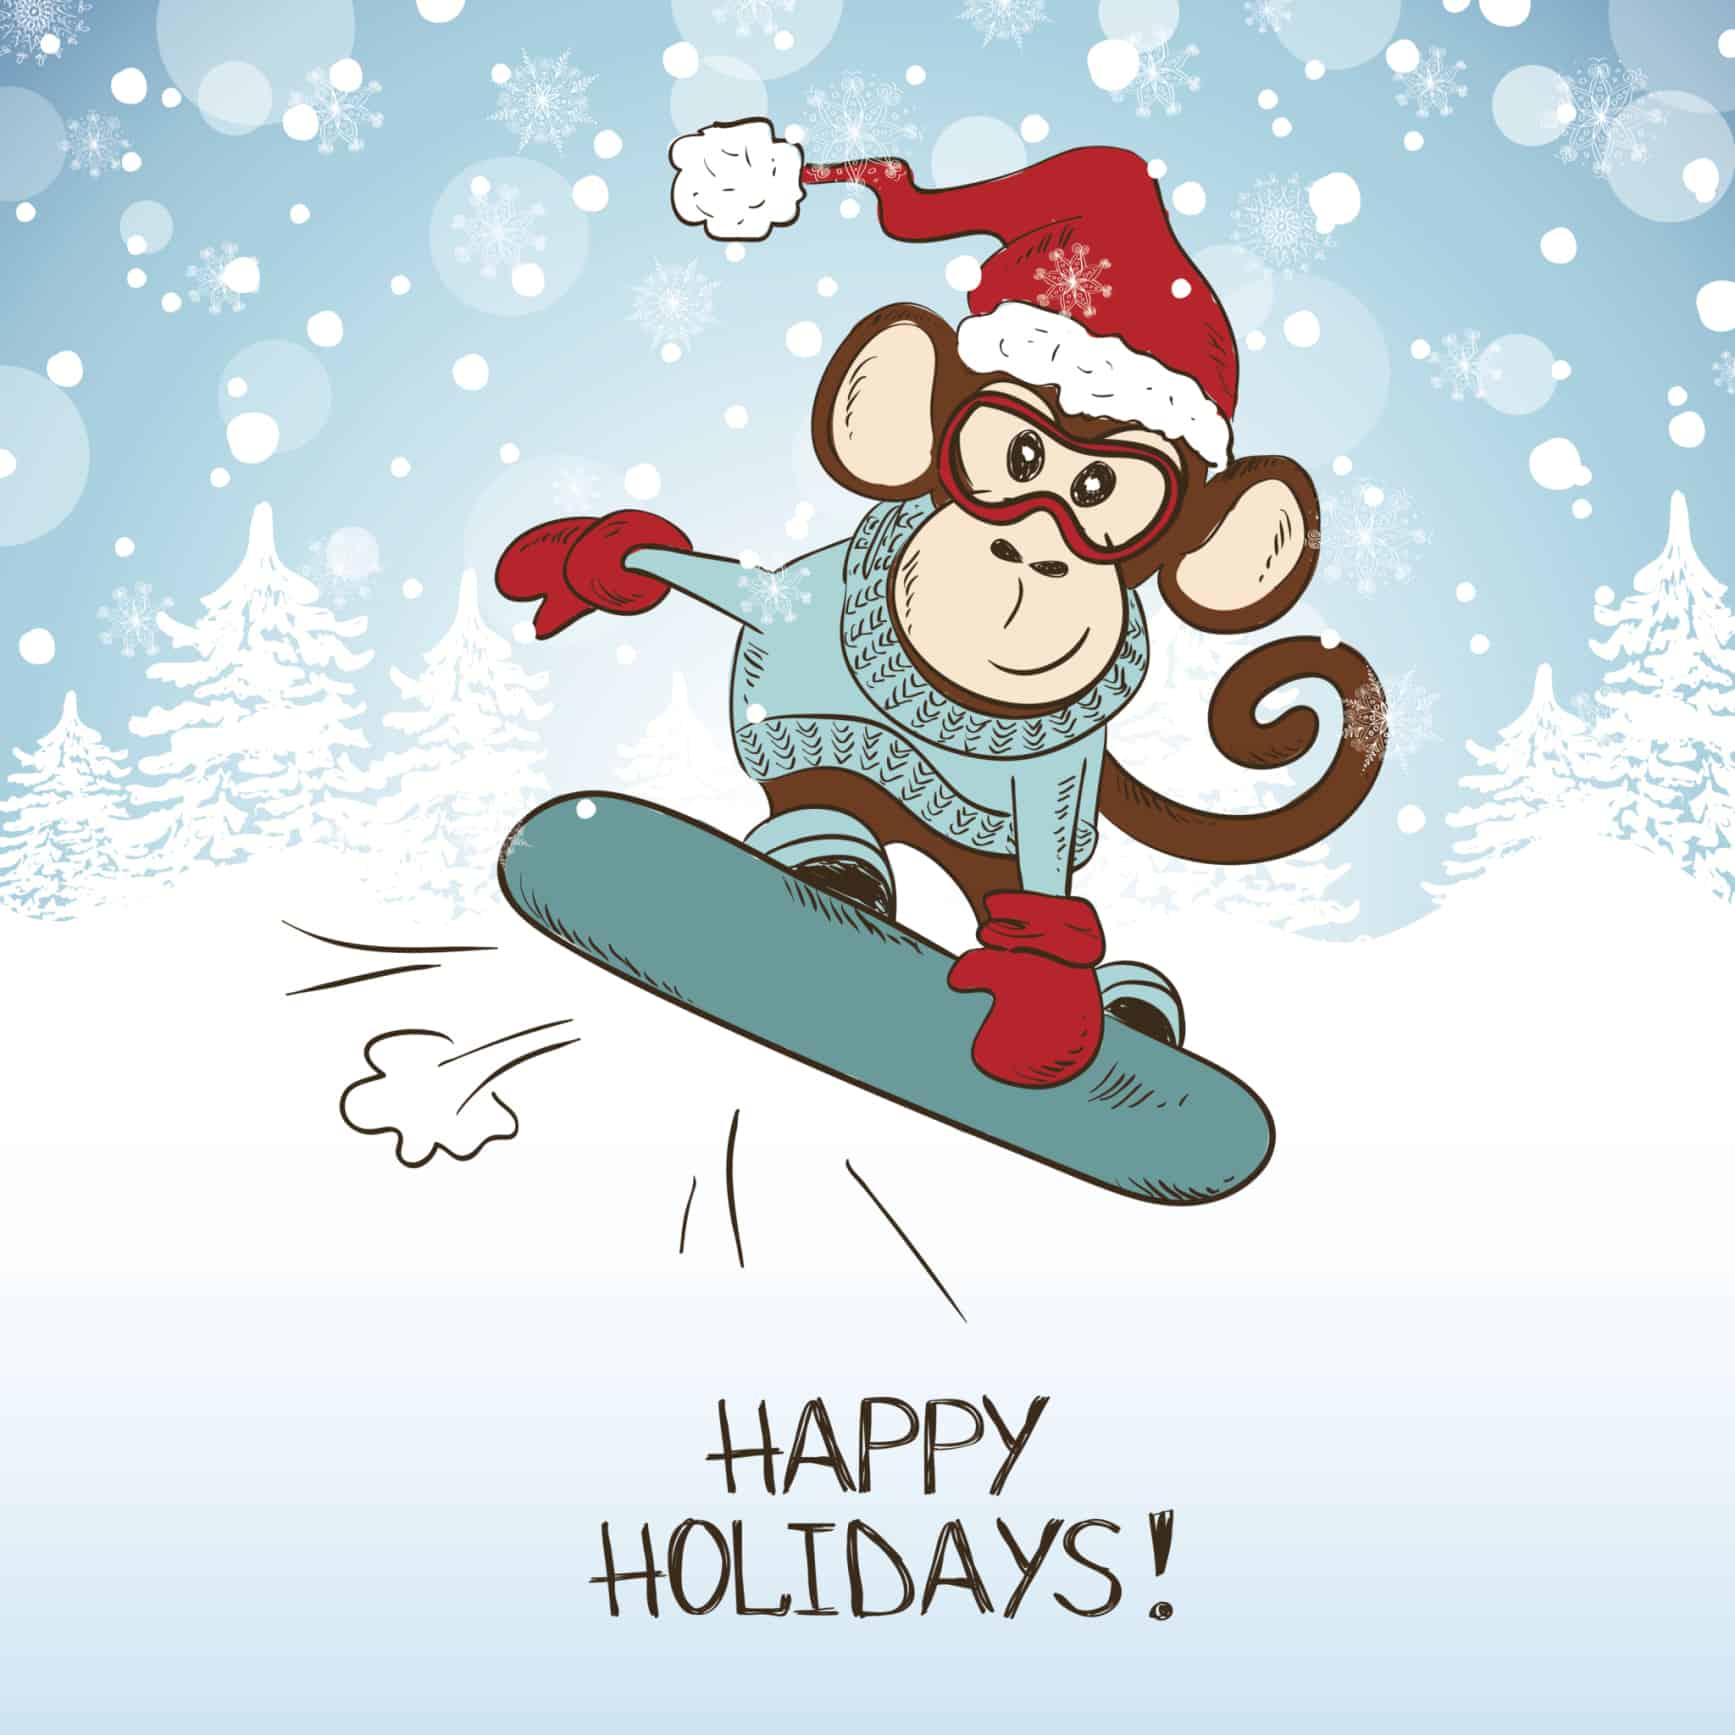 Happy Holidays! monkey on snowboard